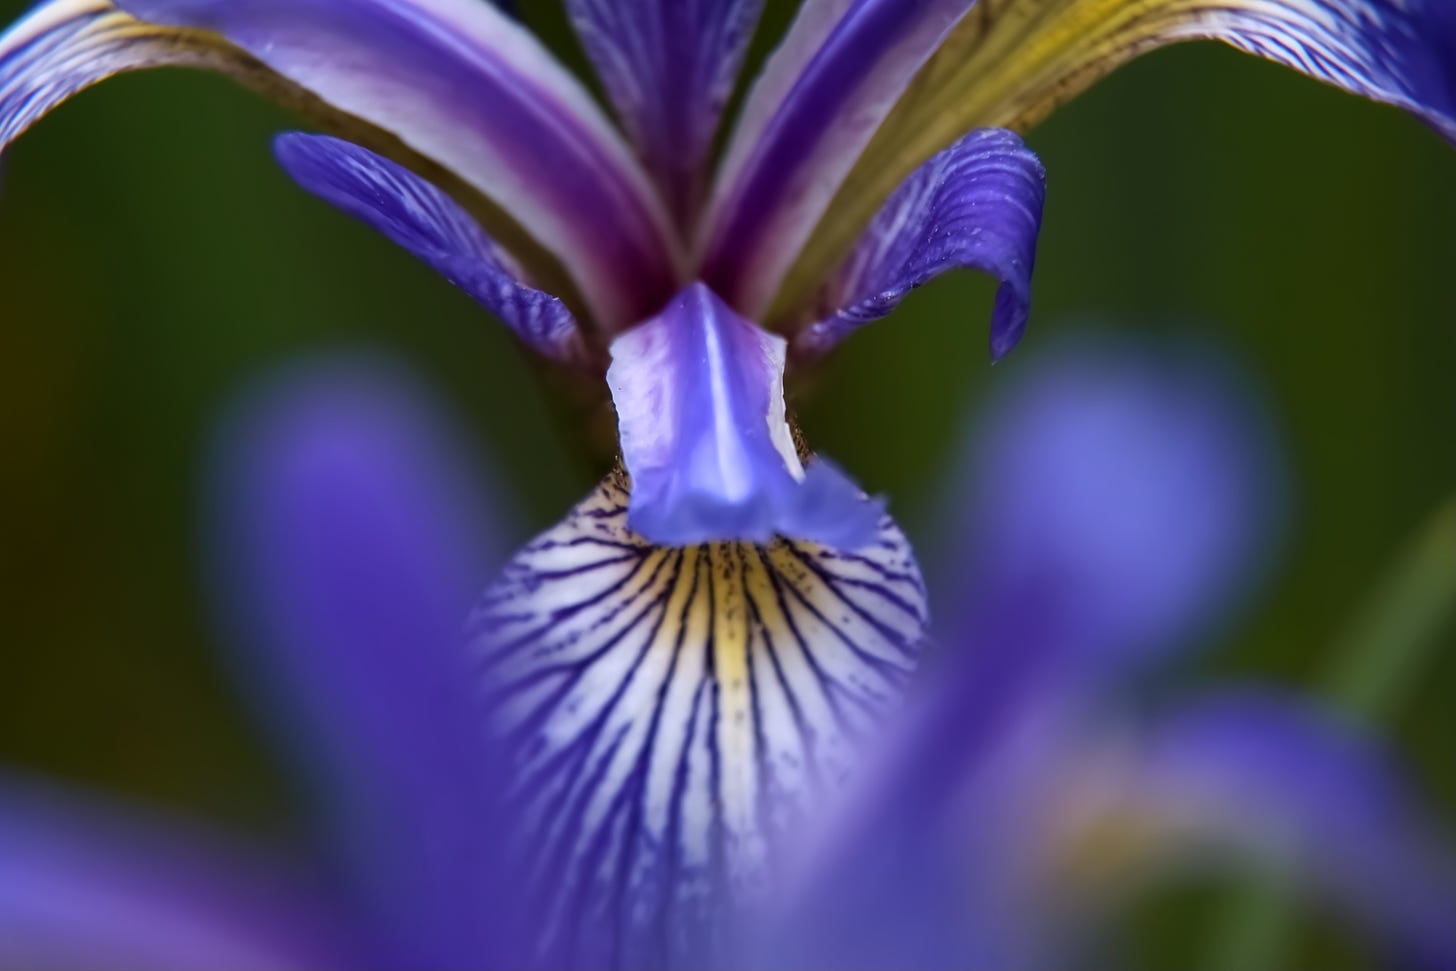 Step into purple - a Northern Blue Flag Iris, viewed up close.